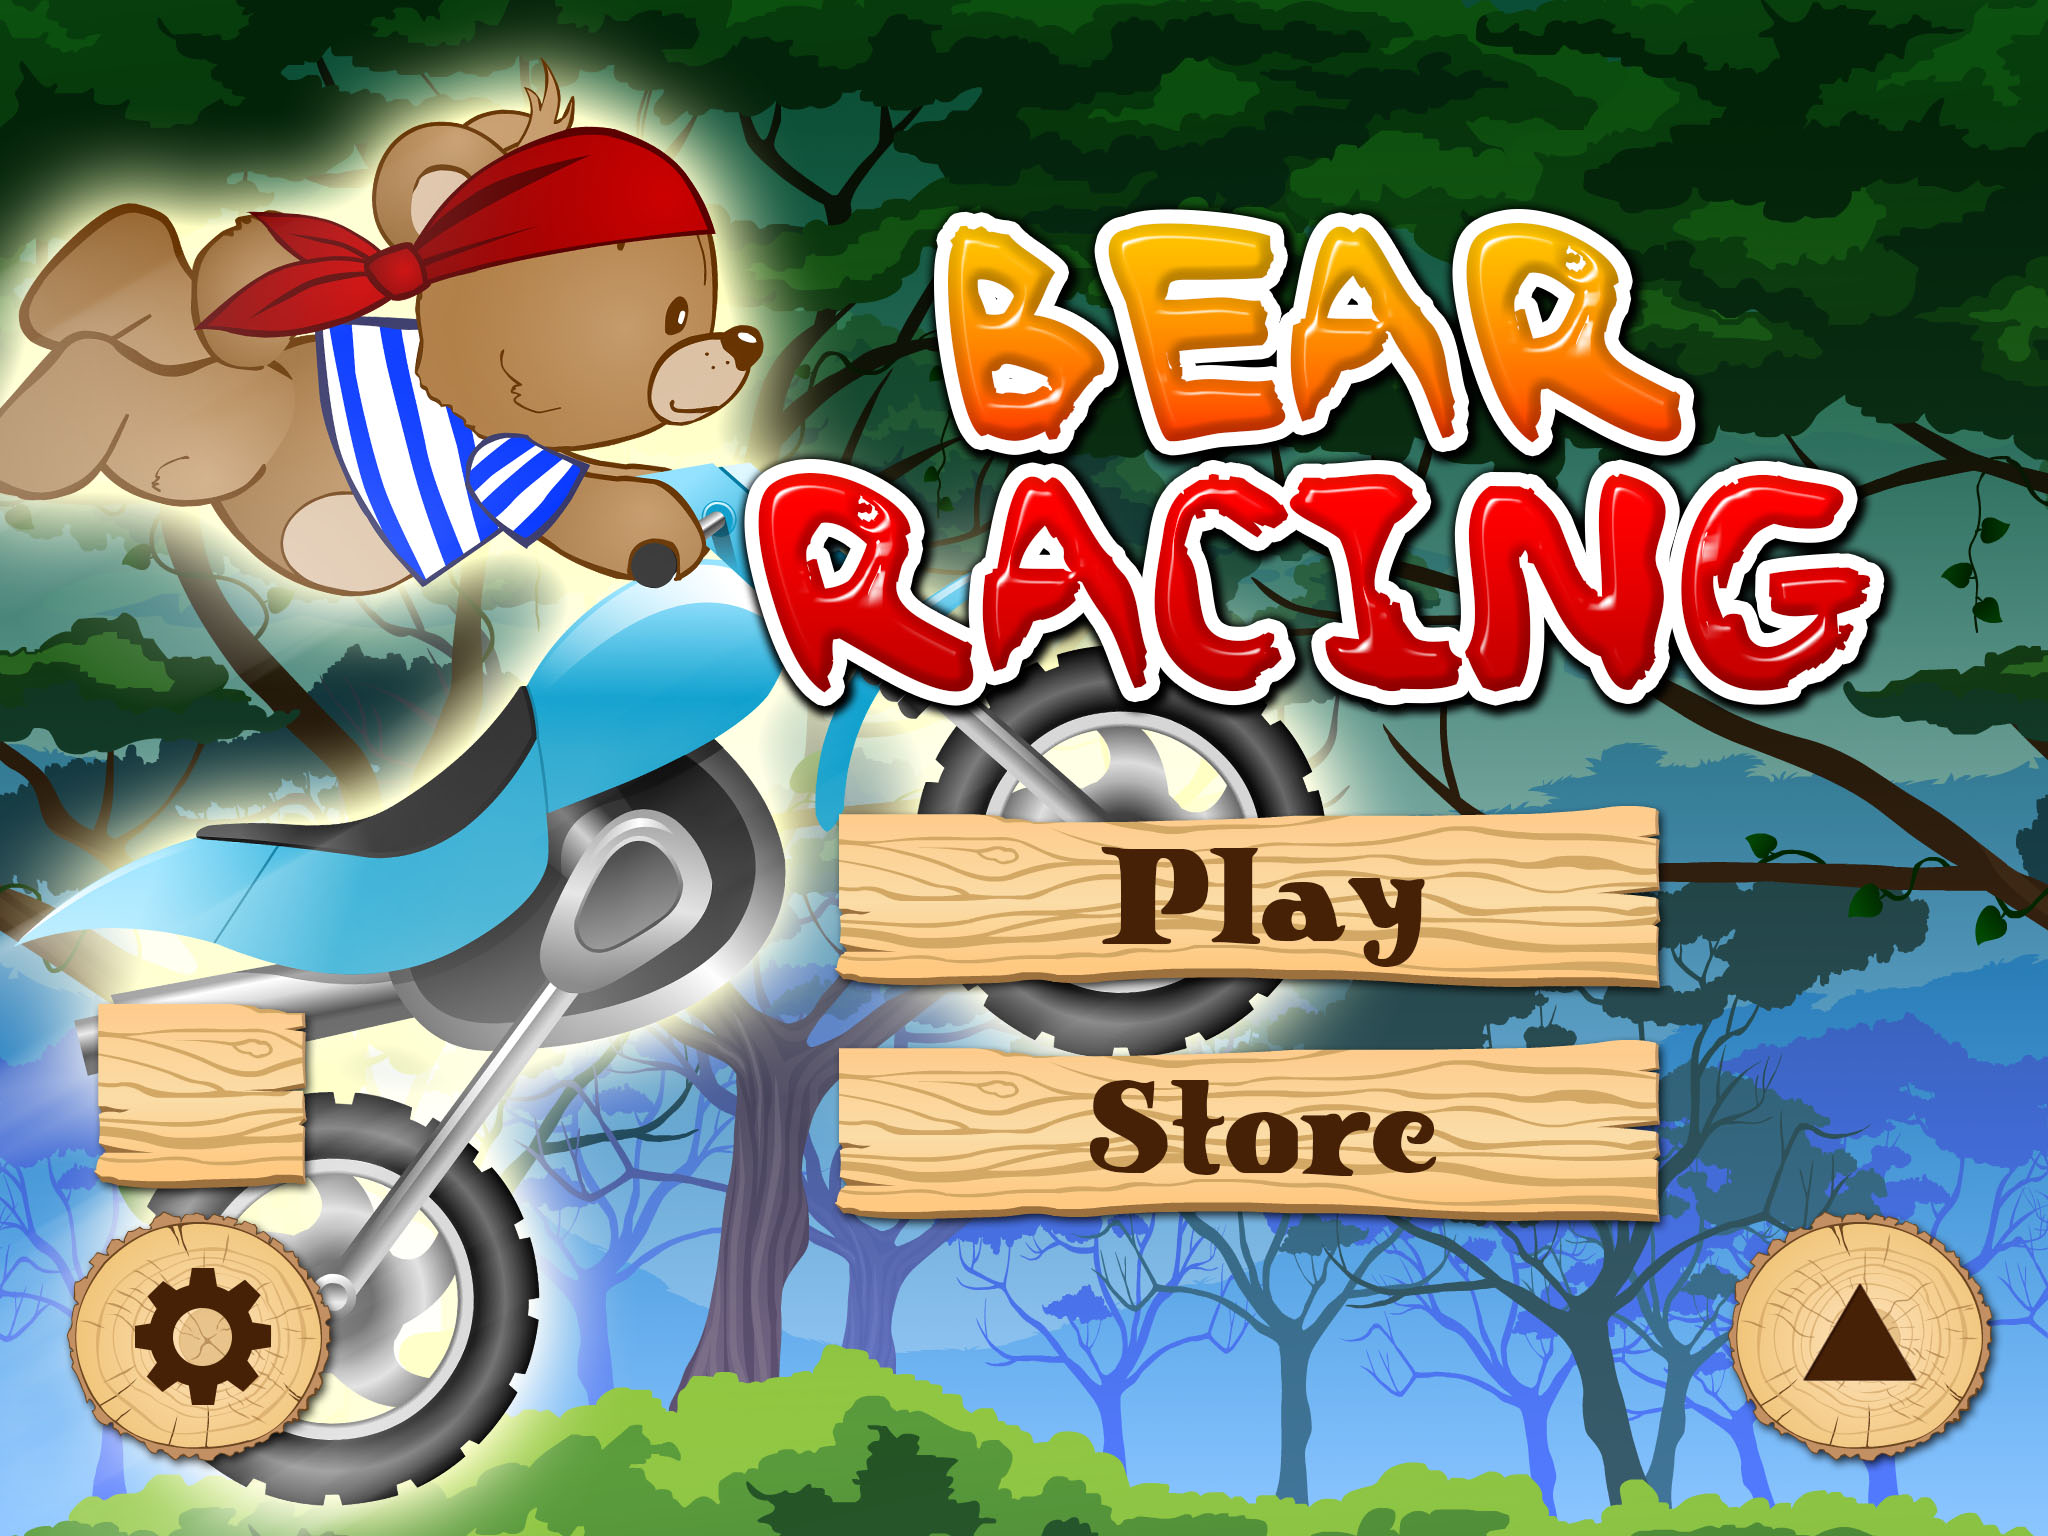 Bear racing